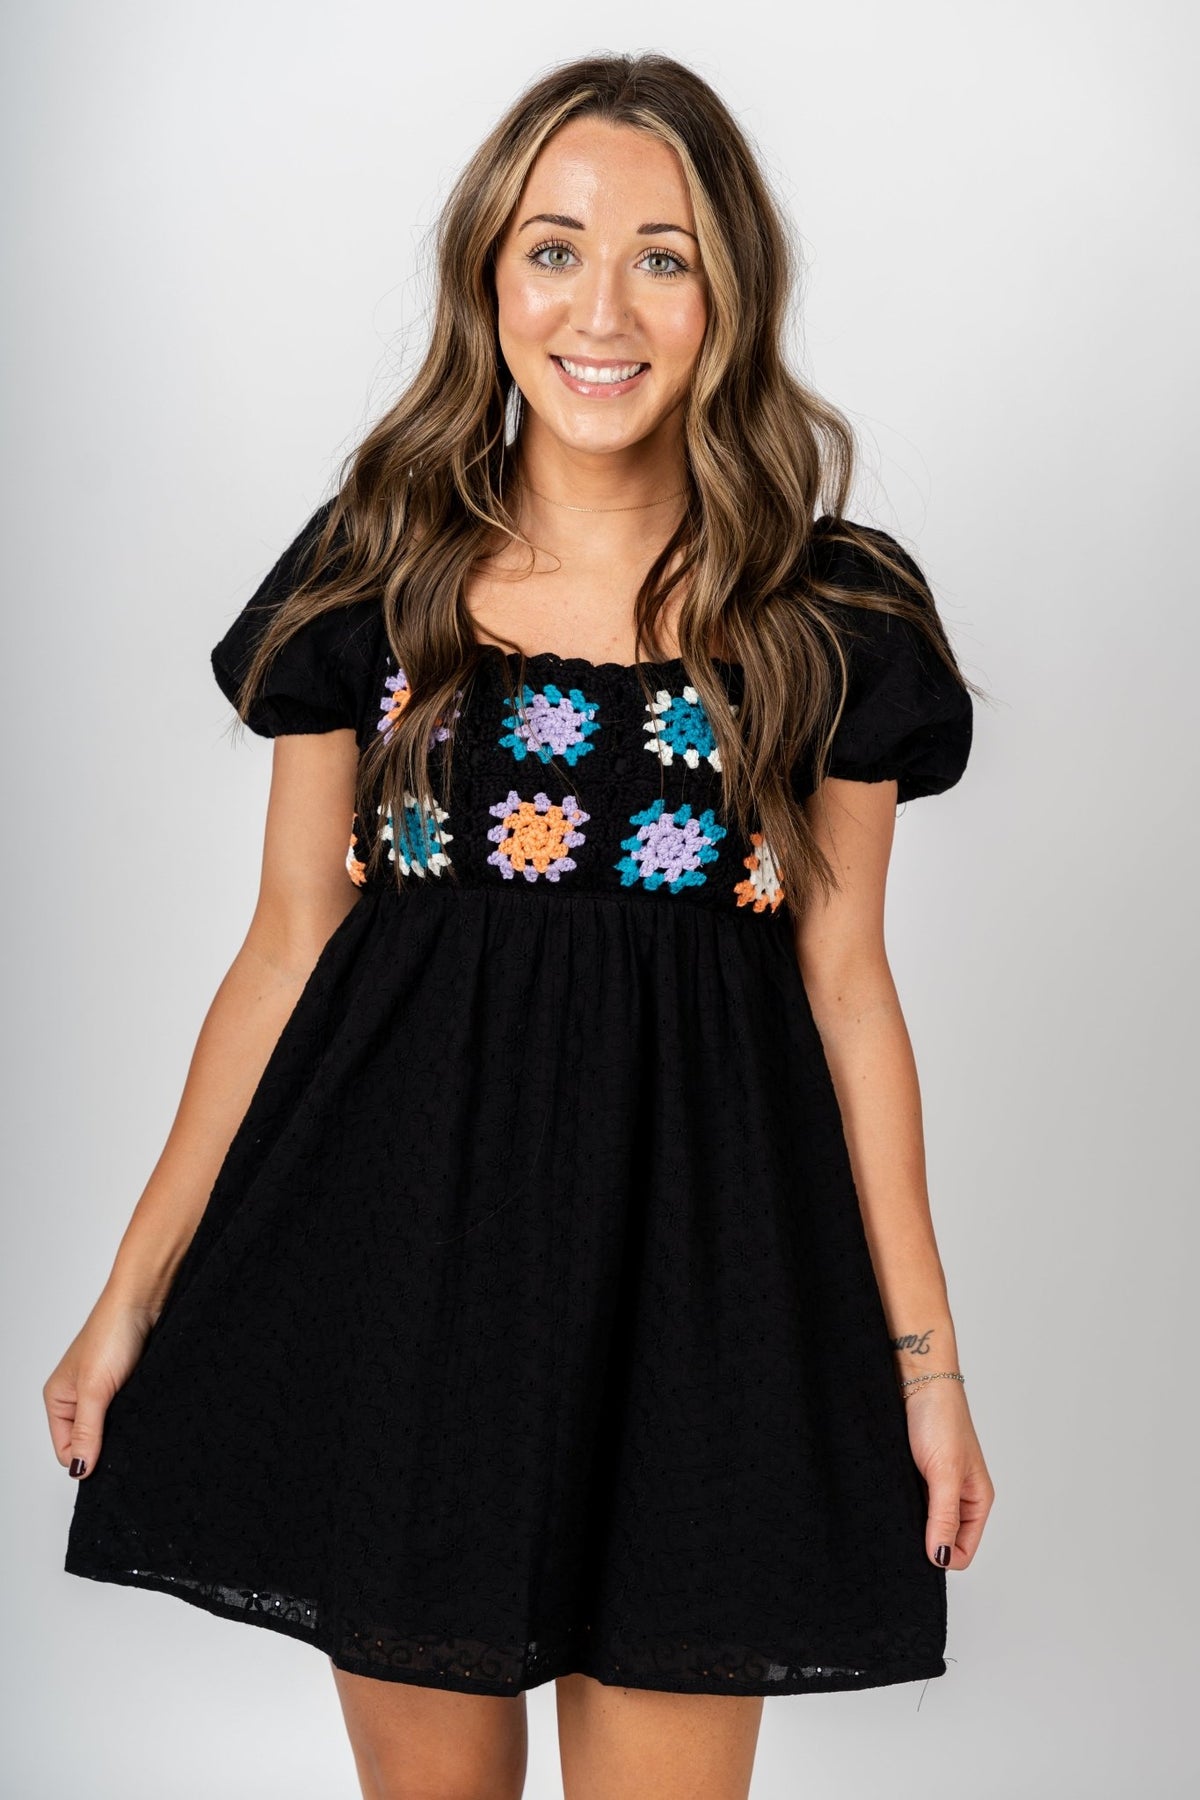 Crochet babydoll dress black - Cute Dresses - Trendy Dresses at Lush Fashion Lounge Boutique in Oklahoma City